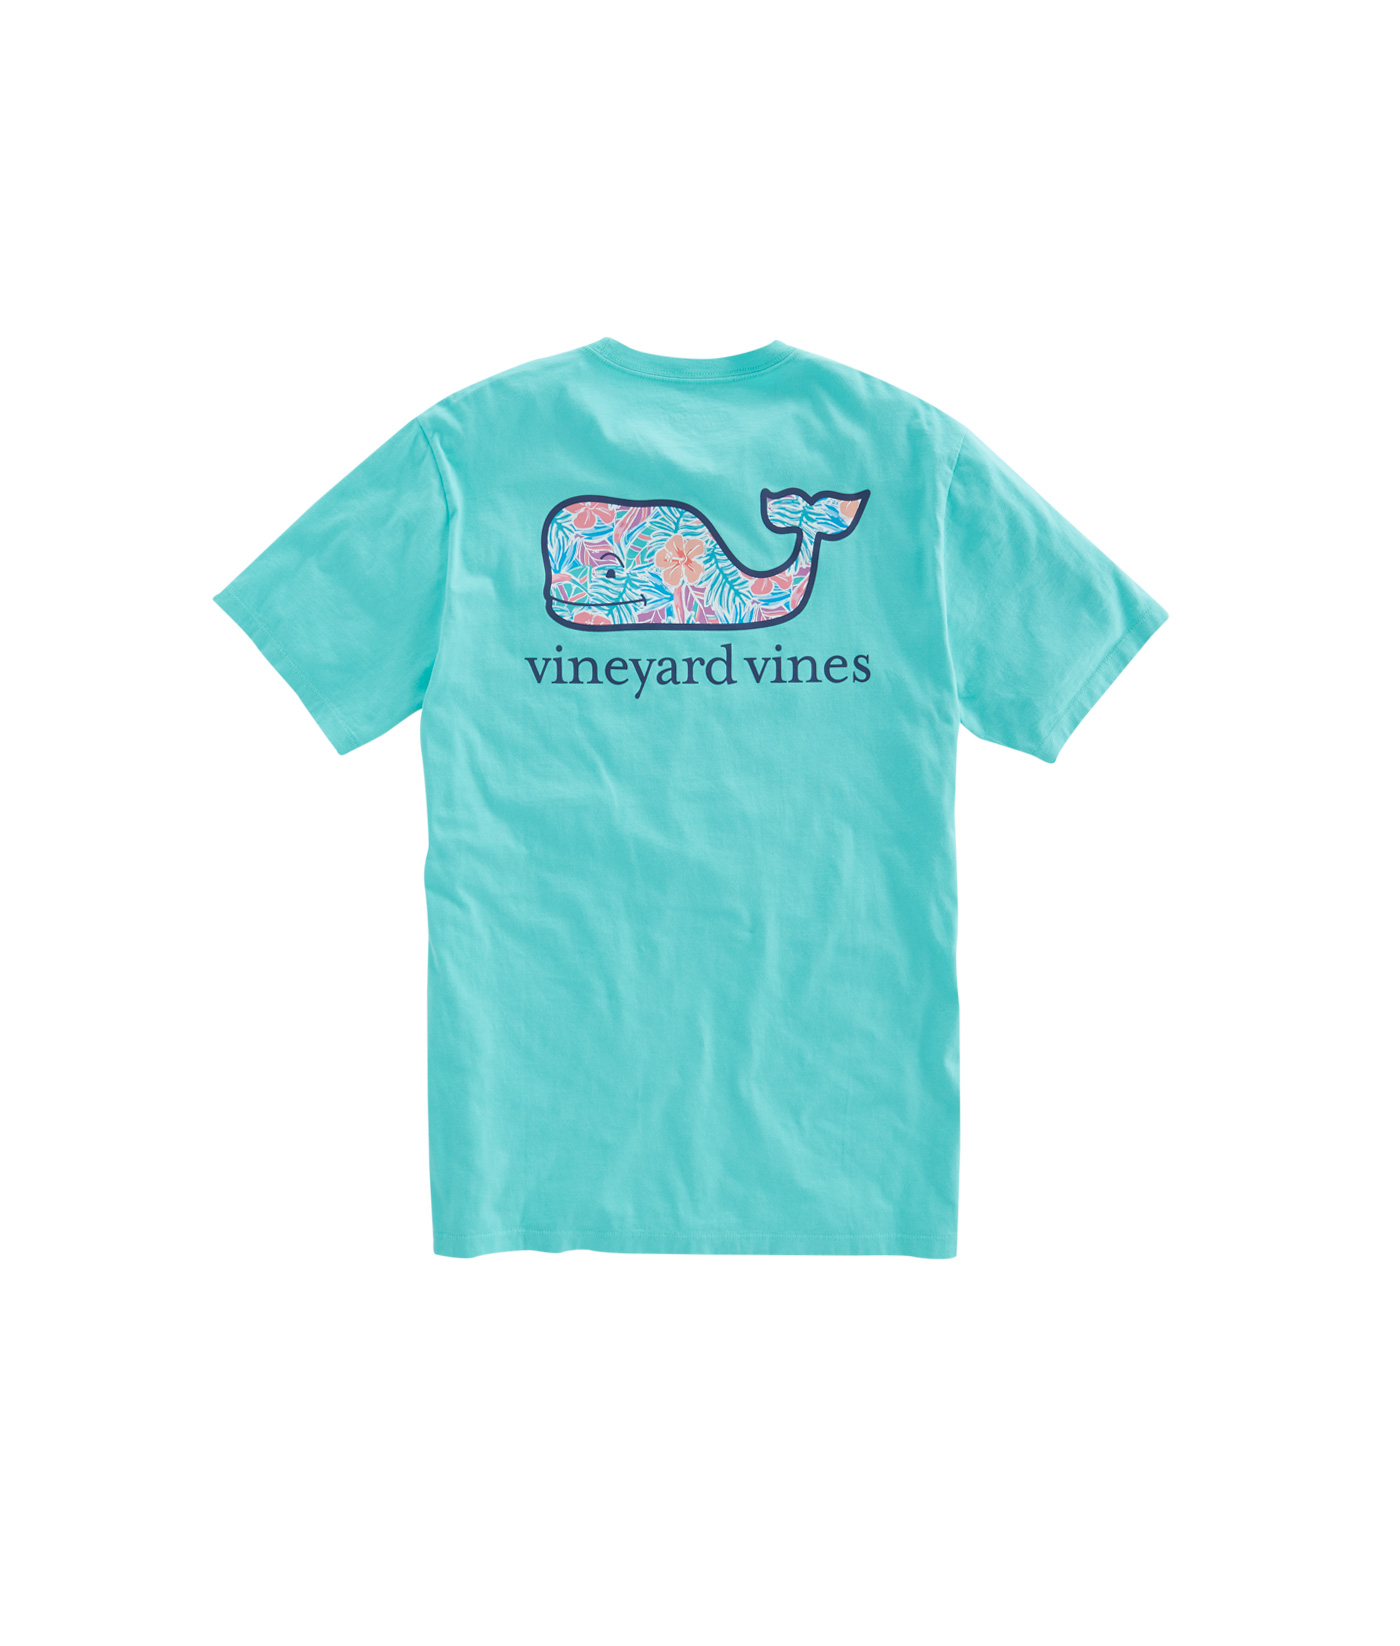 Shop Floral Whale Fill Pocket T-Shirt at vineyard vines